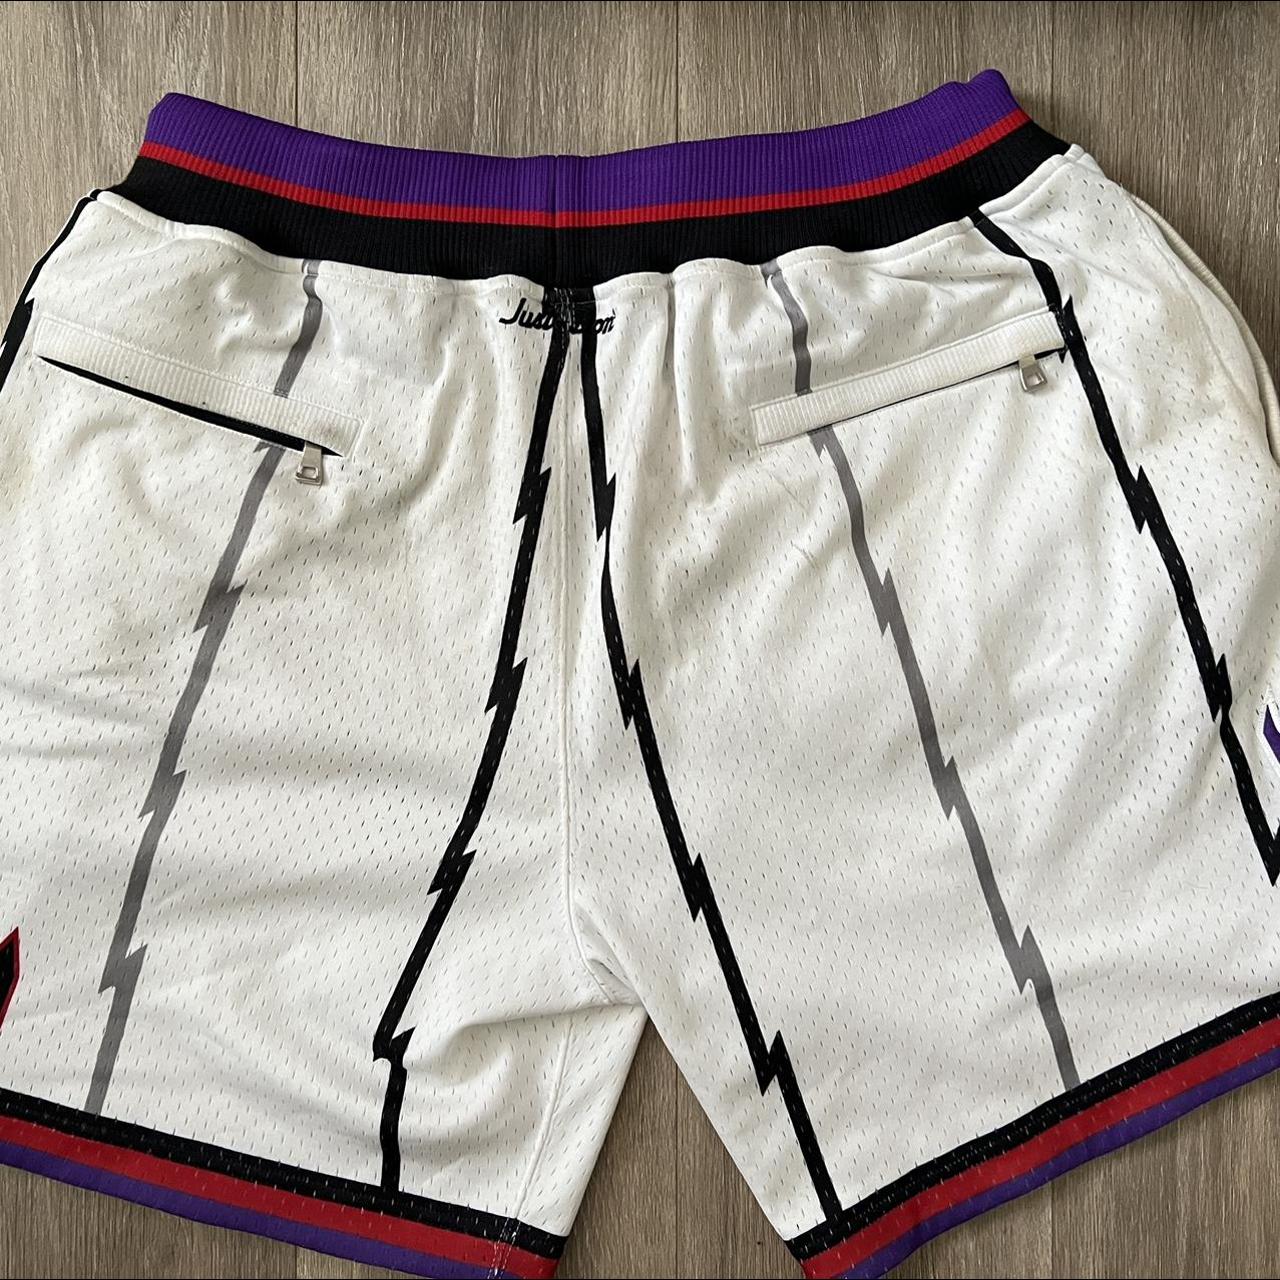 Toronto raptors basketball shorts stitched emblems - Depop